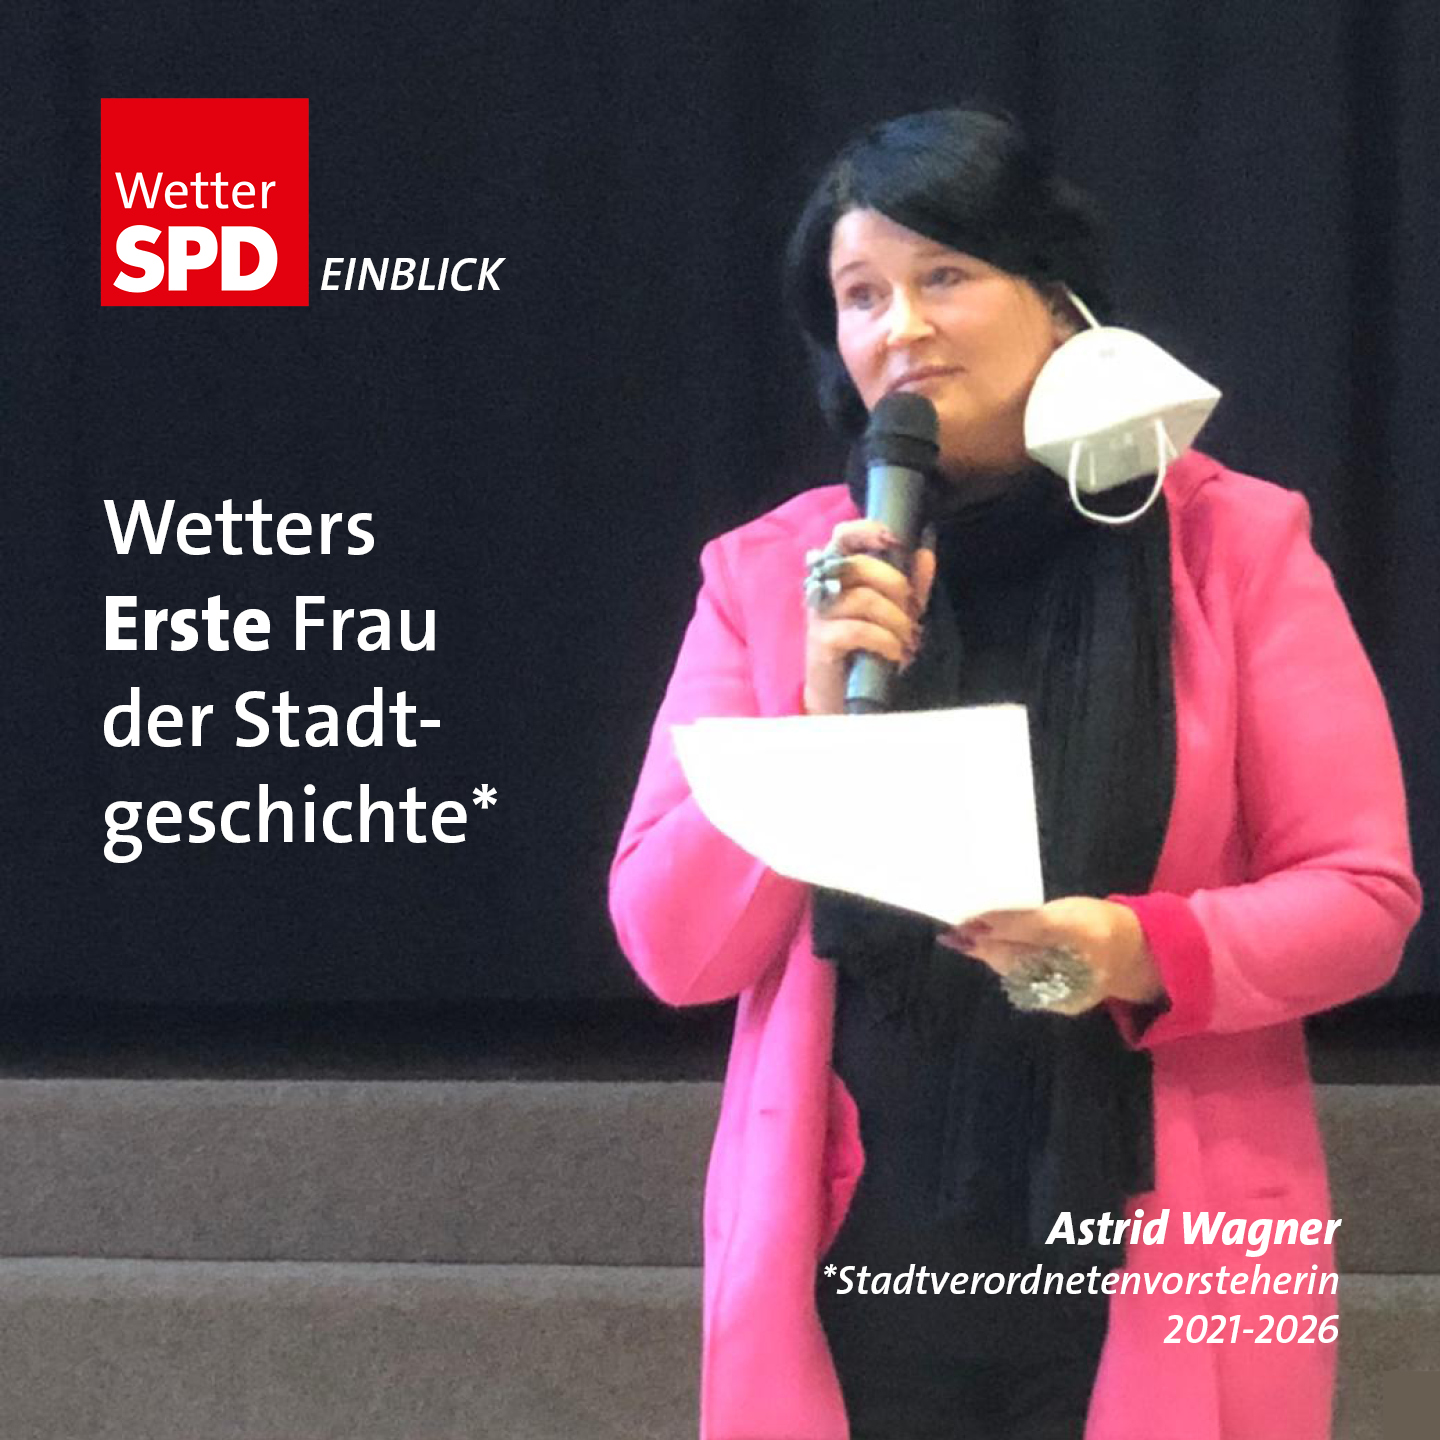 Astrid Wagner, Stadtverordnetenvorsteherin 2021-2026